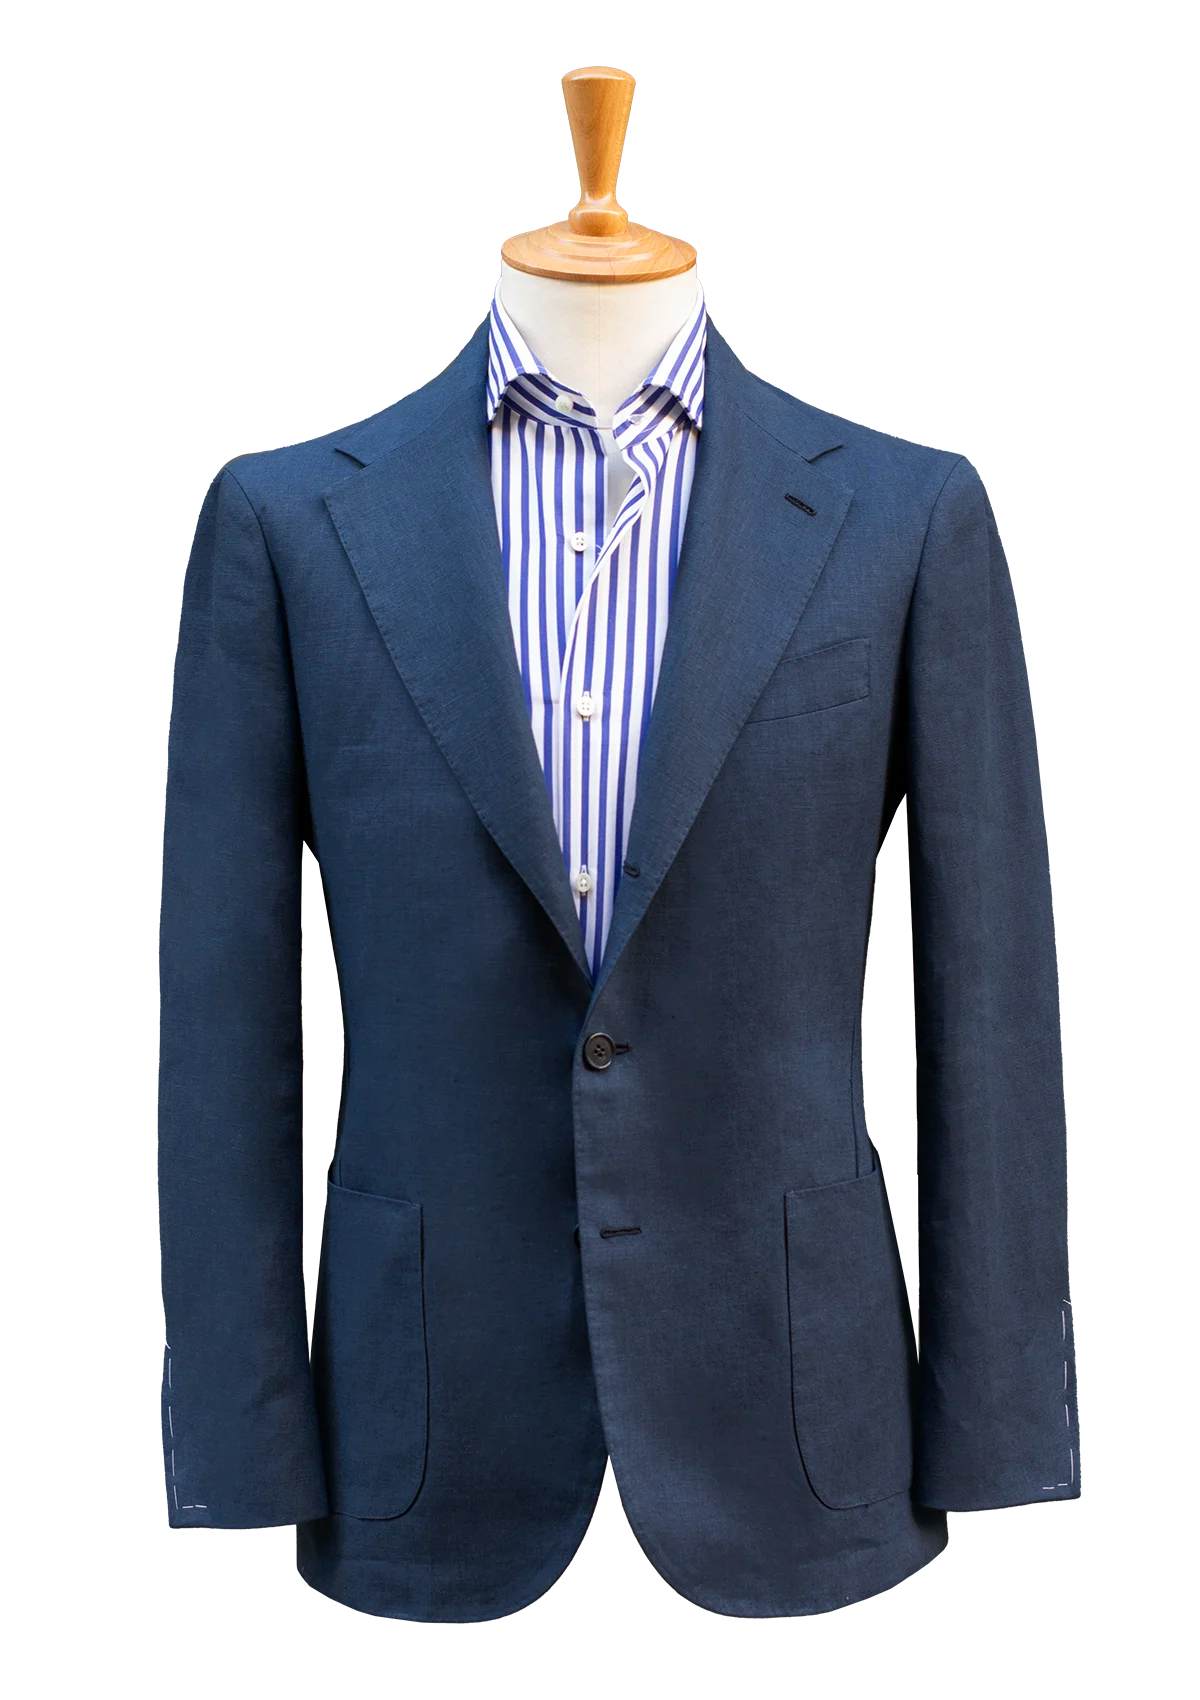 Deconstructed Blue Linen Jacket